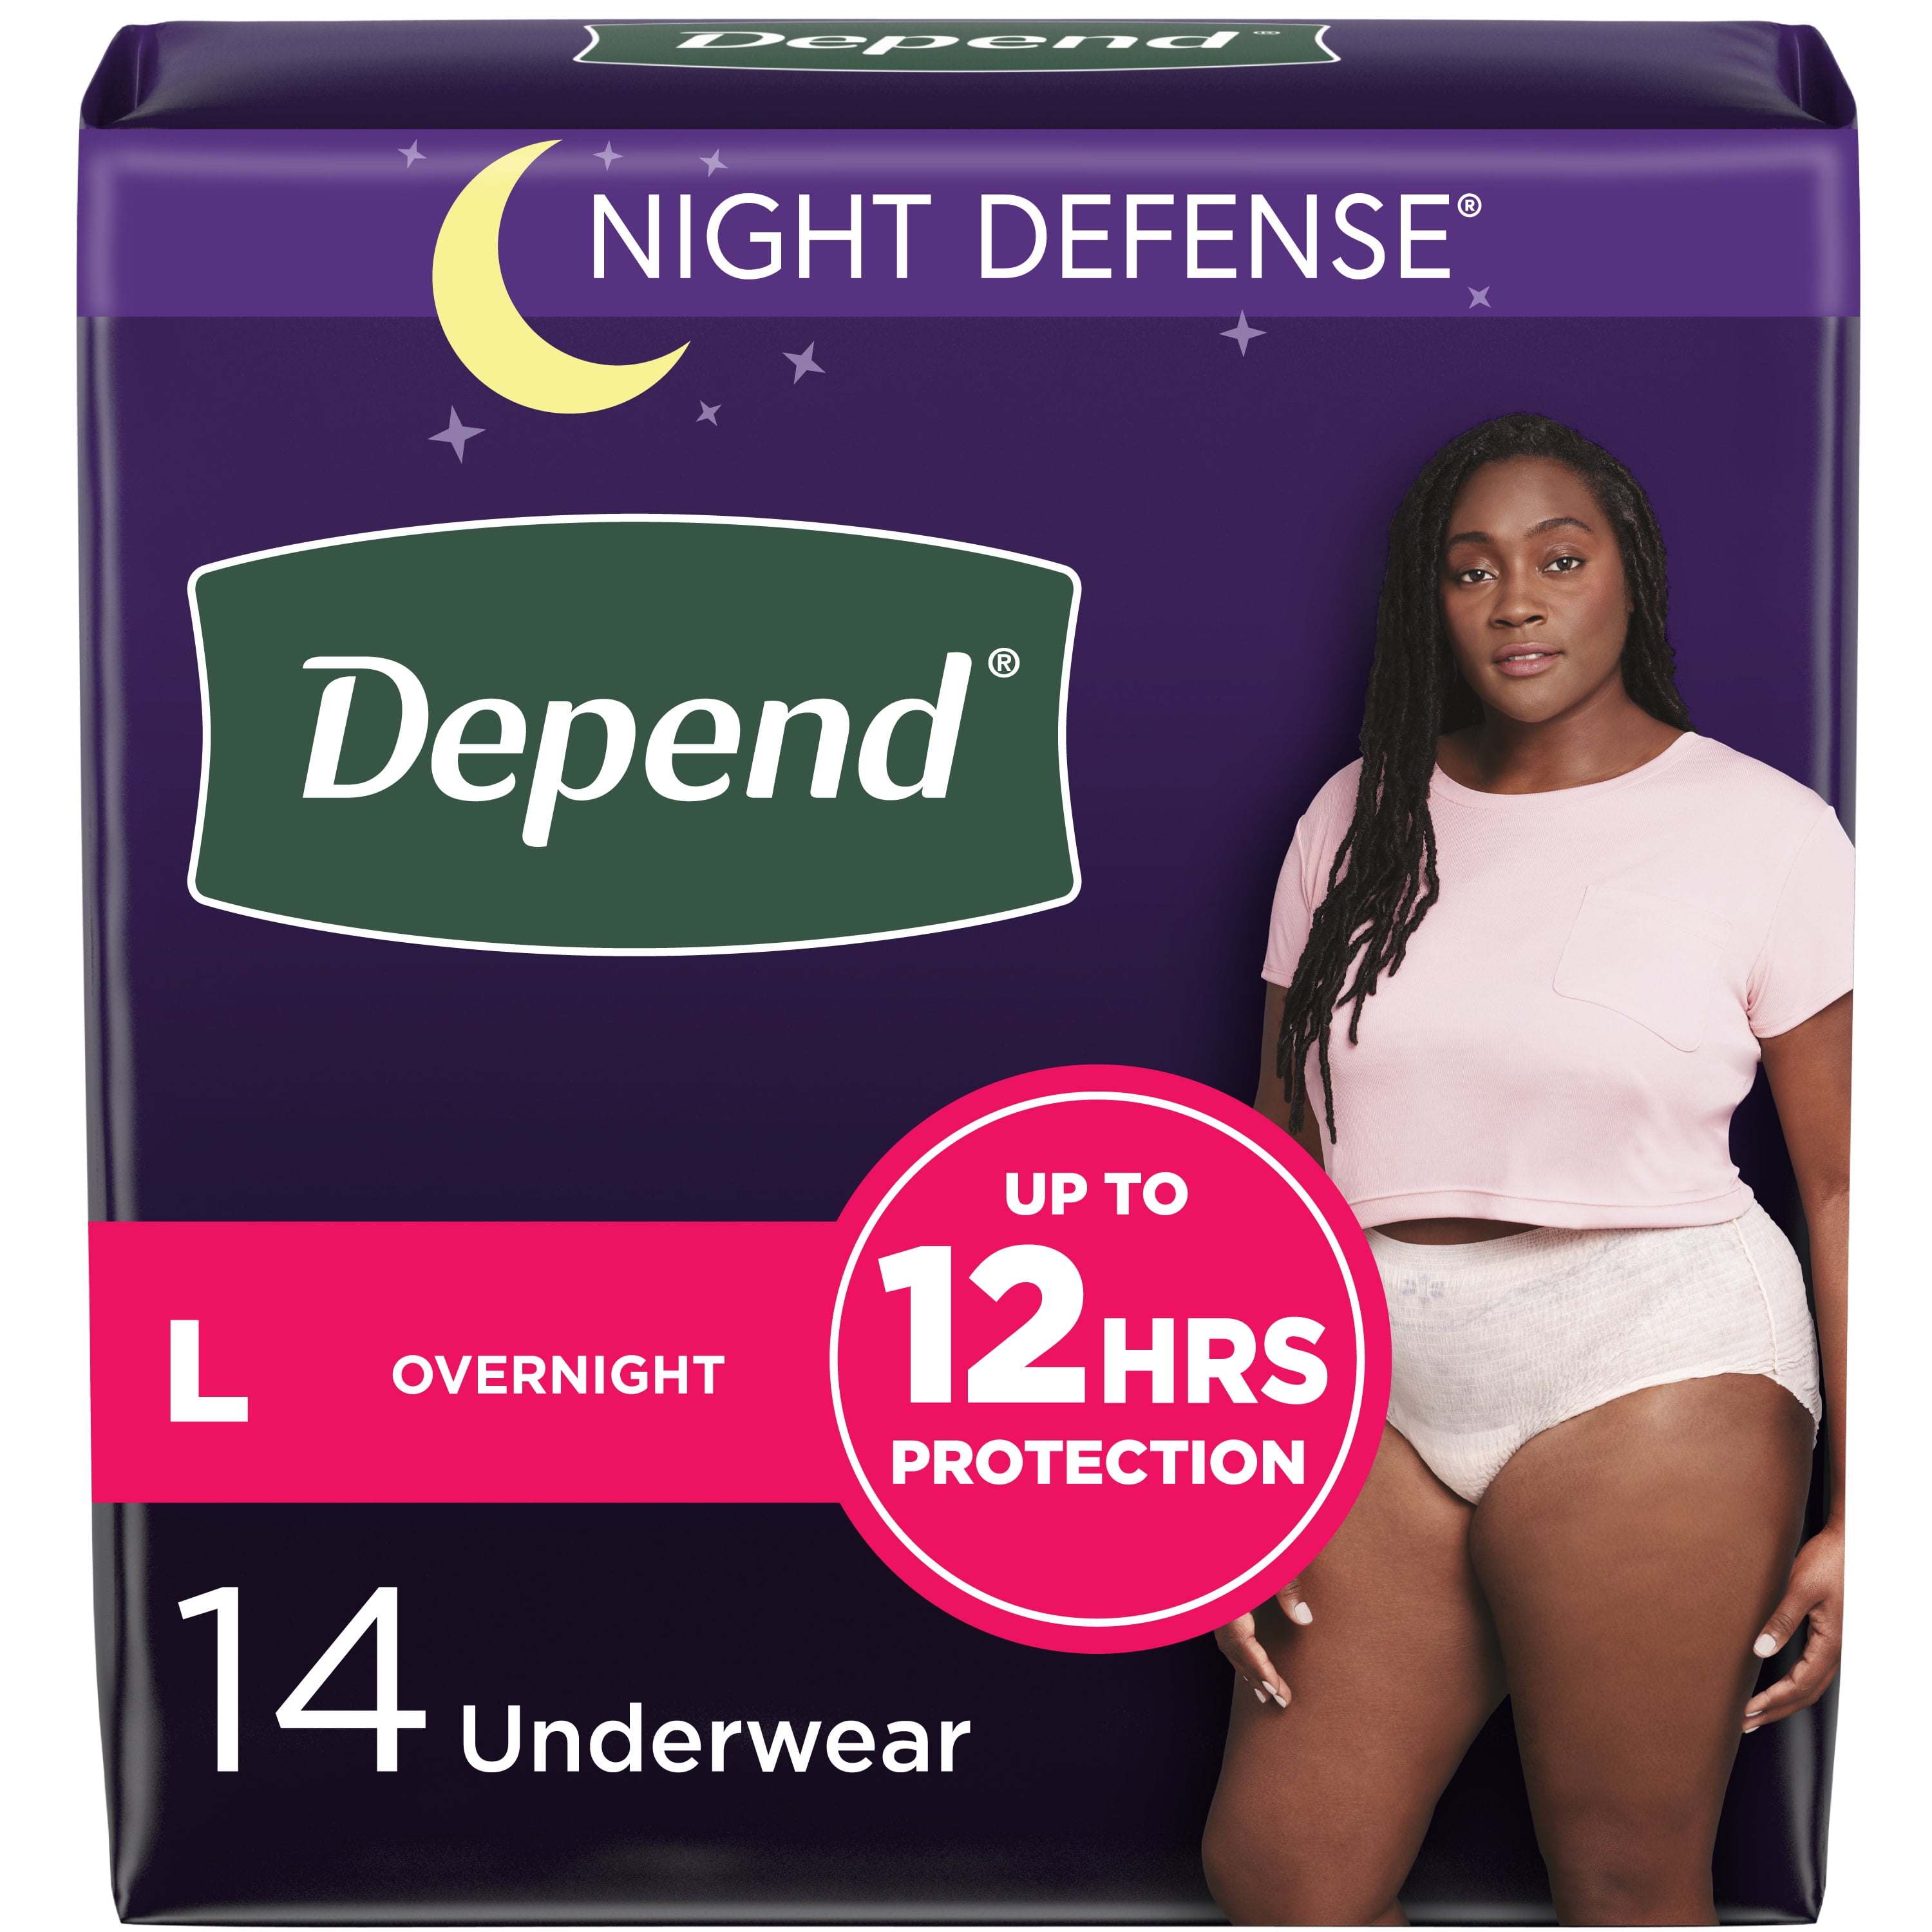 Always Discreet Adult Incontinence Underwear for Women, Size XXL